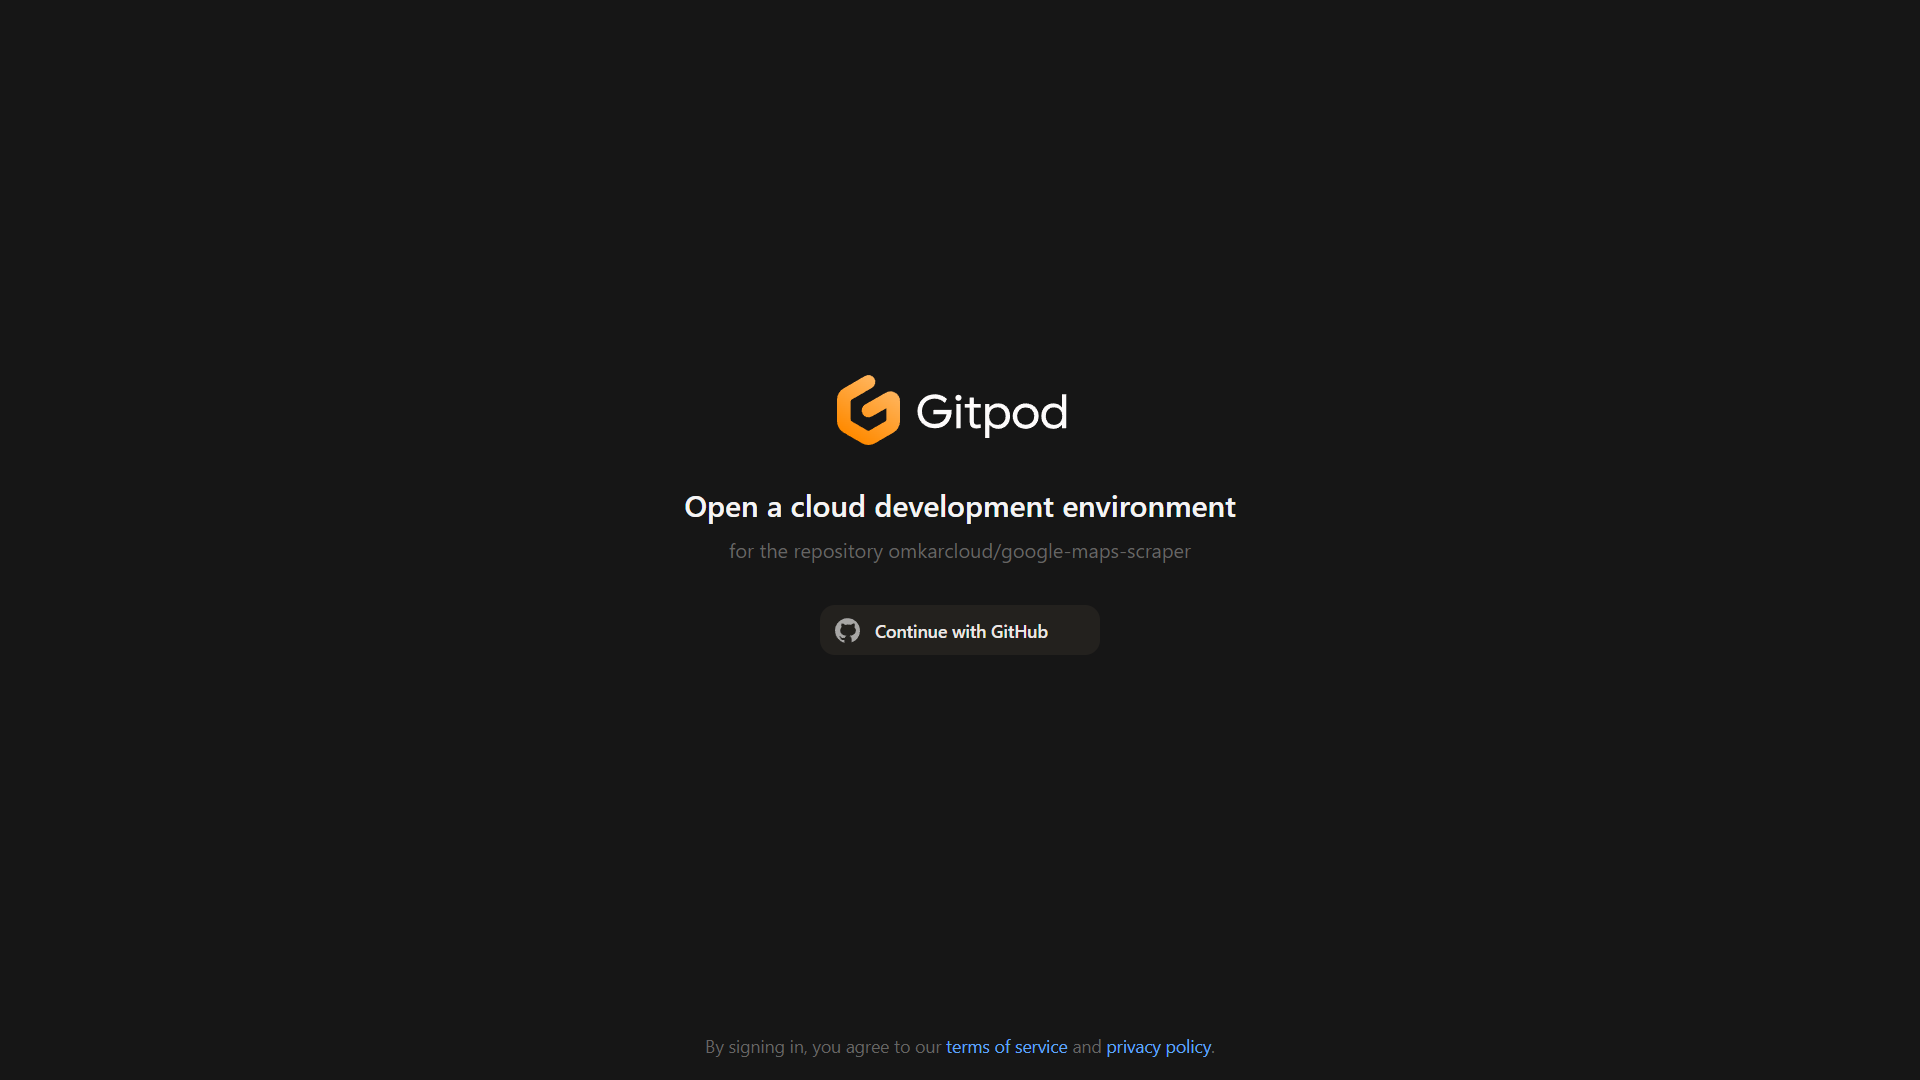 Gitpod Google Scraper Sign Up